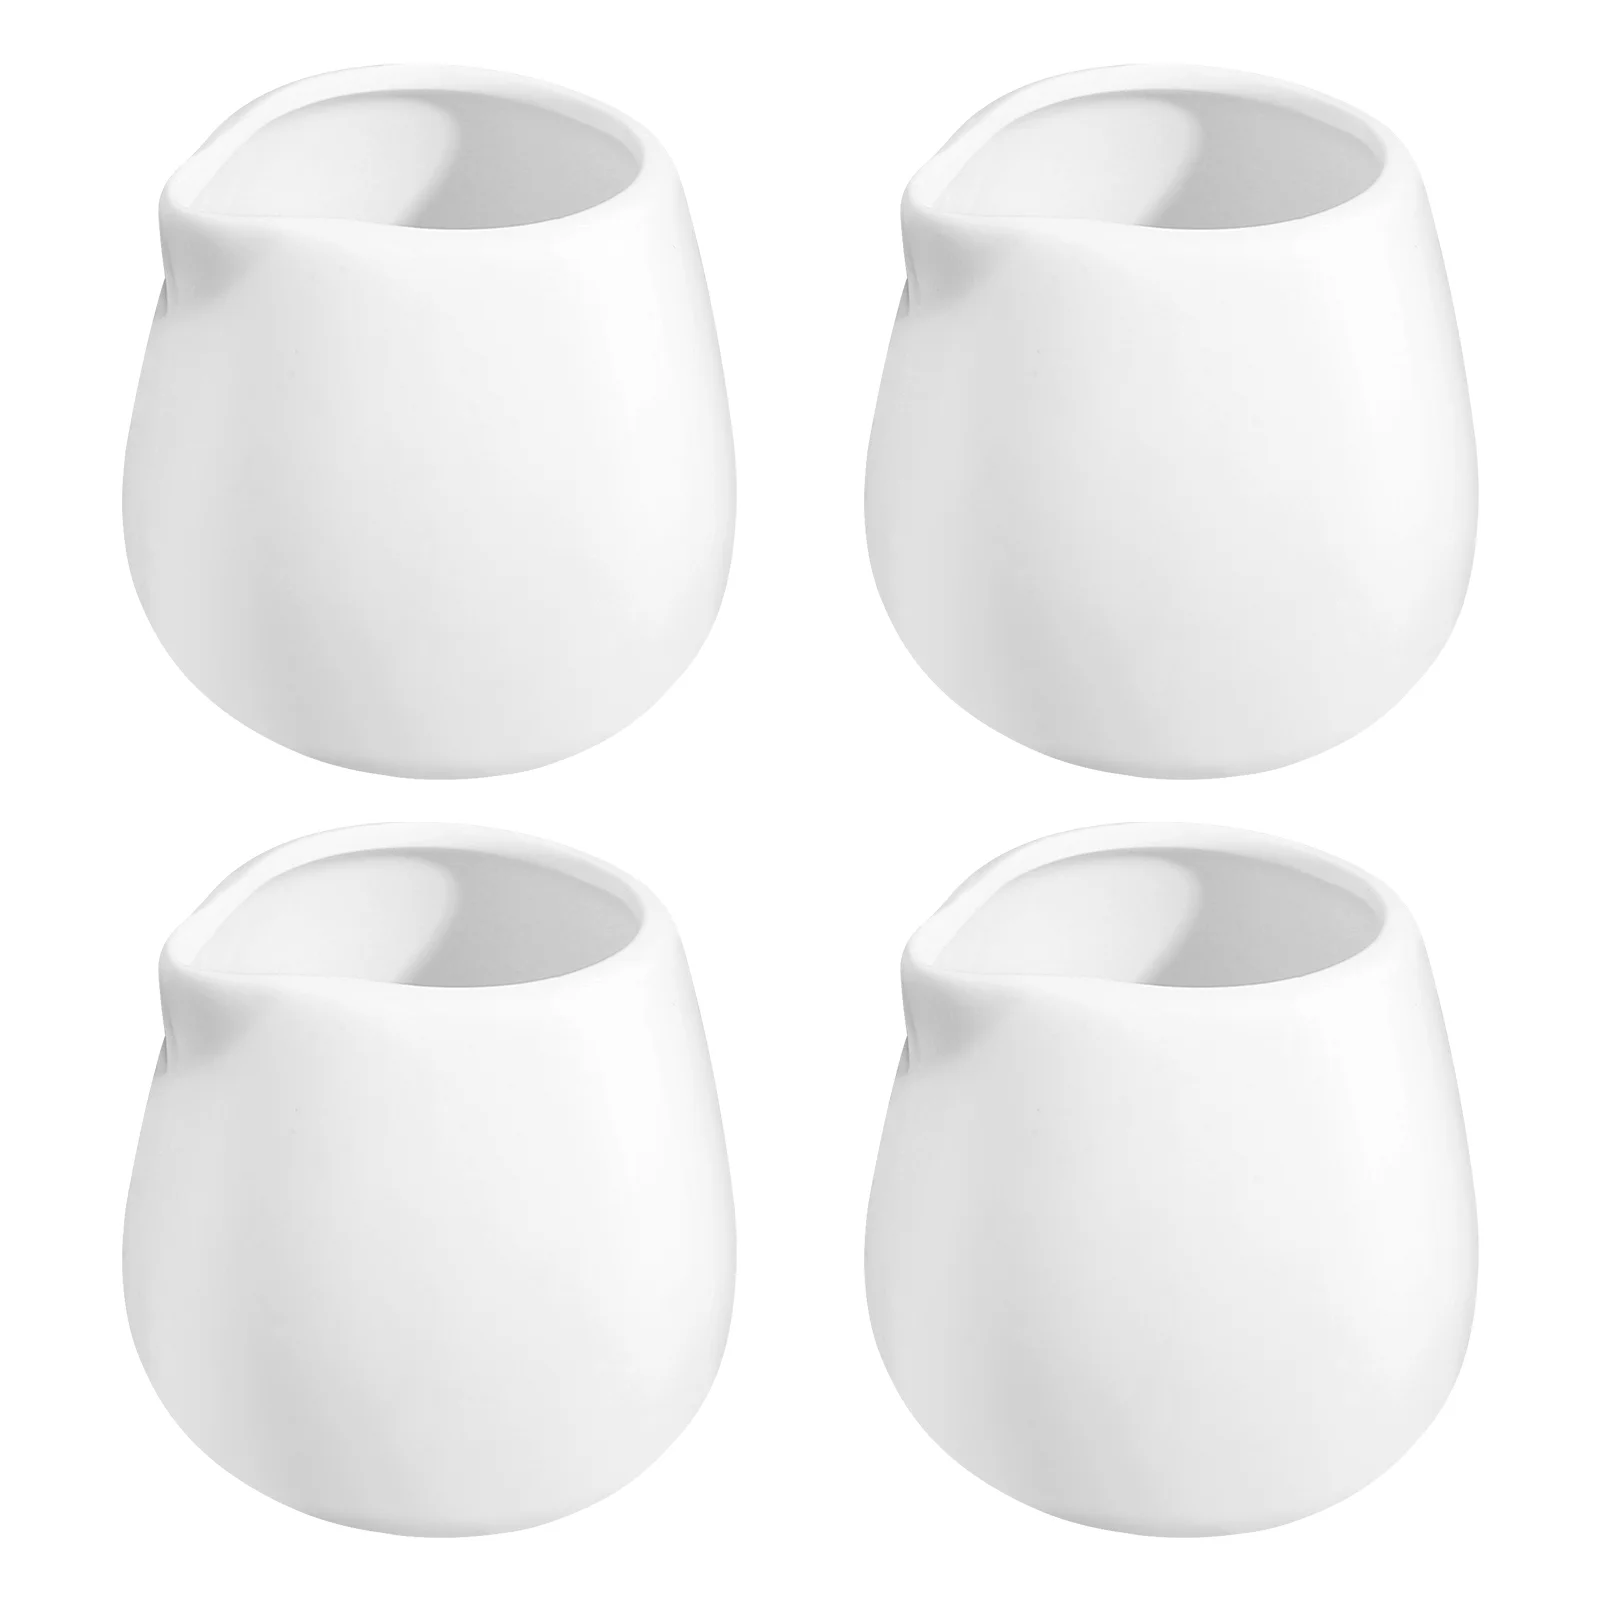 4pcs Household Ceramic Portable Kitchen Serving Sauce Cups Creamer Bowls Sauce Bowls Creamer Pitcher for Cafe Restaurant